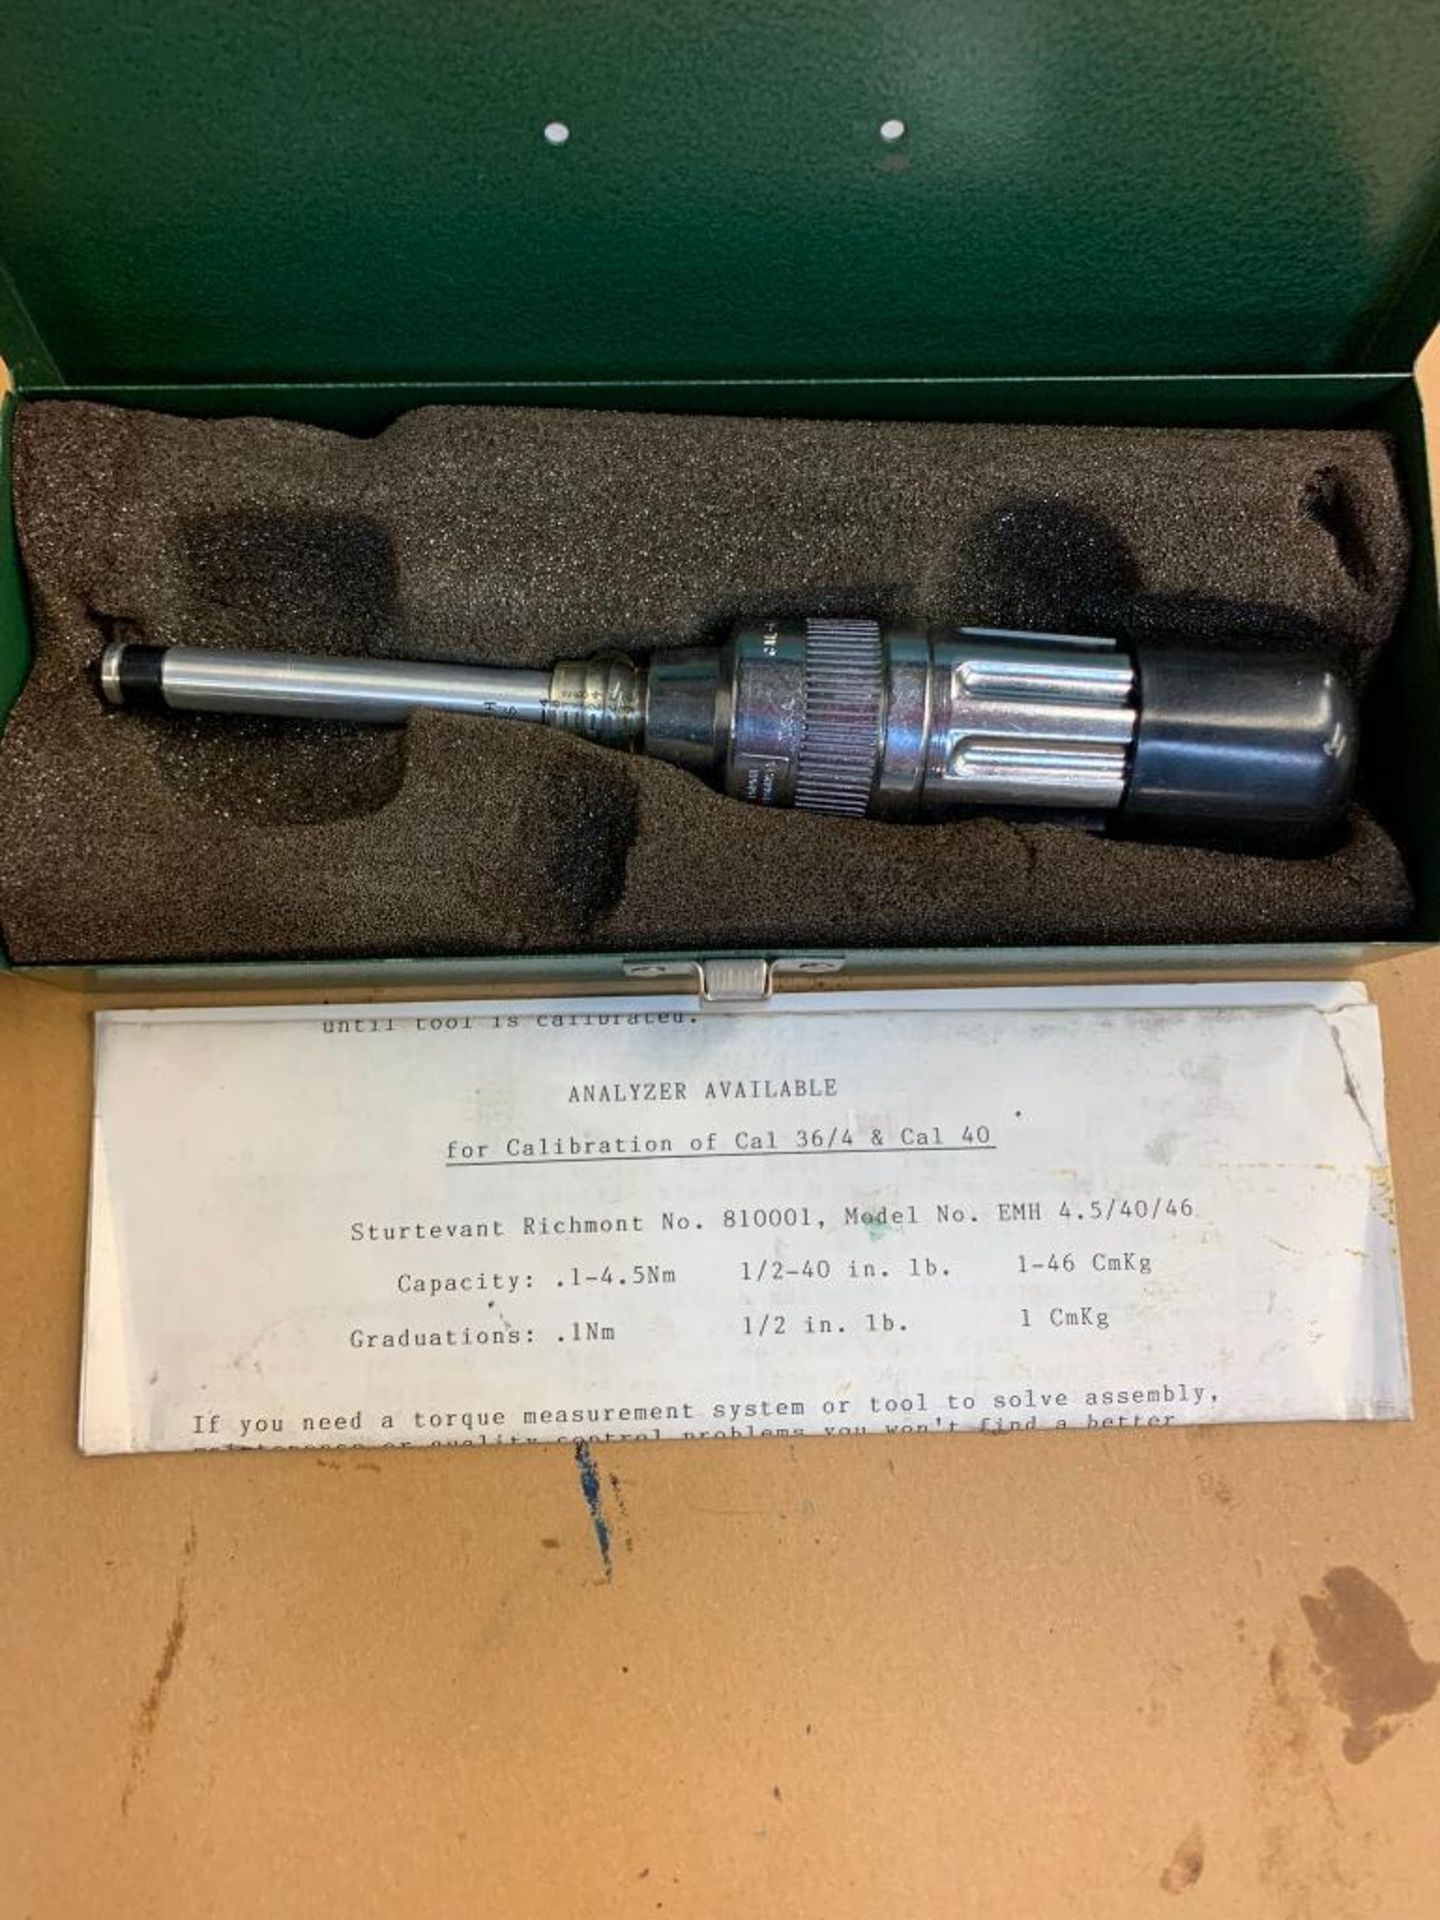 Sturtevant Richmont Torque Screwdriver, Model EMH 4.5/40/46 - Image 2 of 3